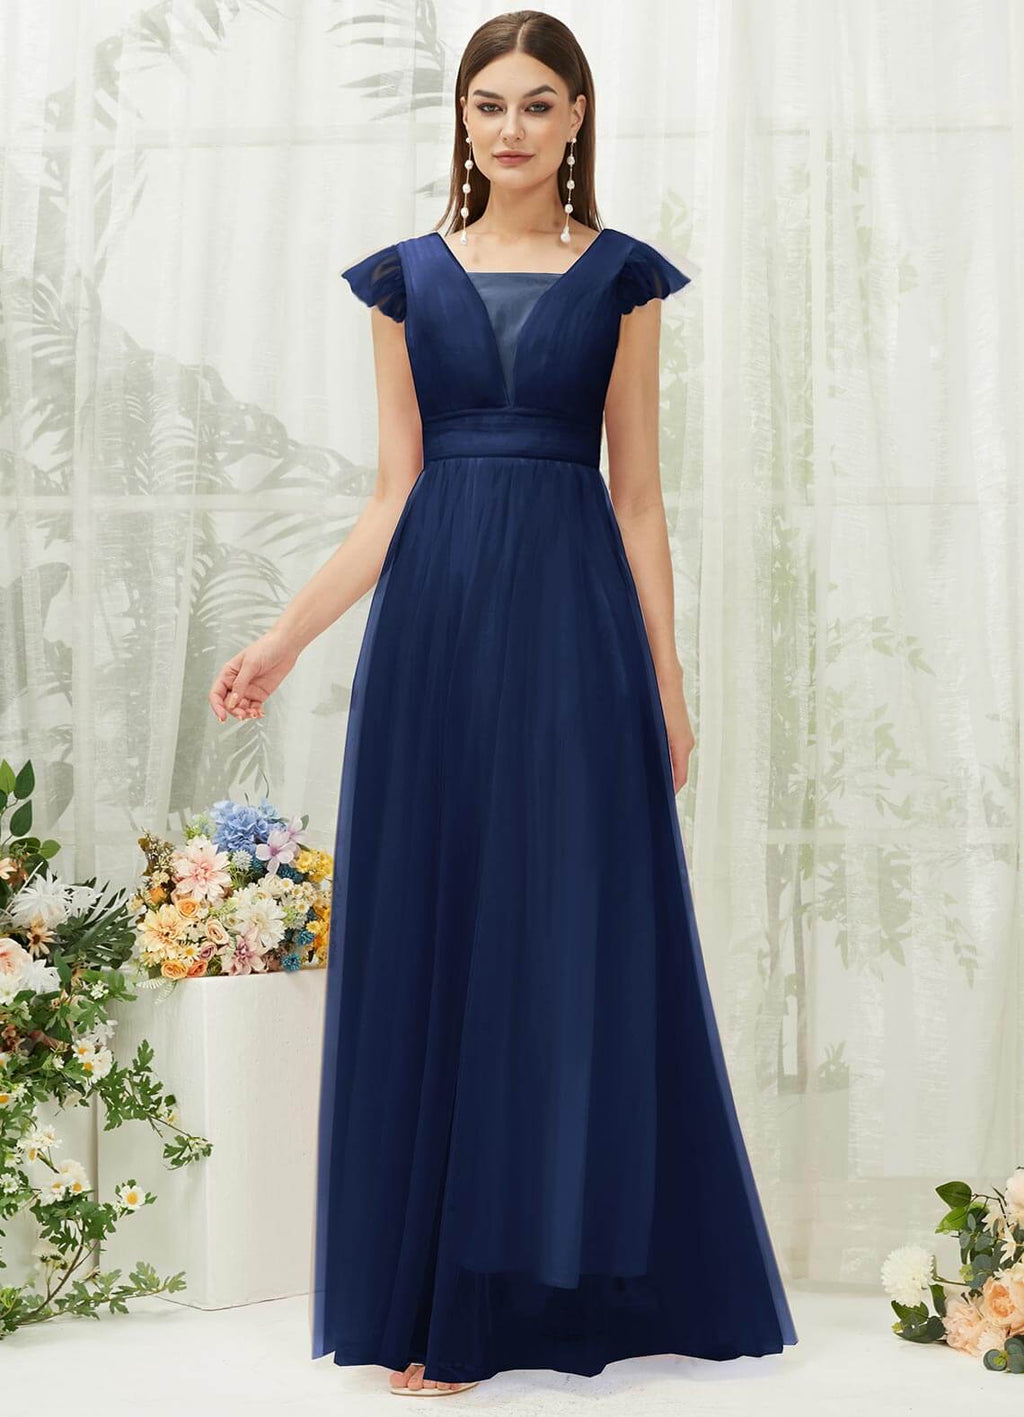 NZ Bridal Navy Blue Backless Floor Length Tulle bridesmaid dresses R0410 Collins a